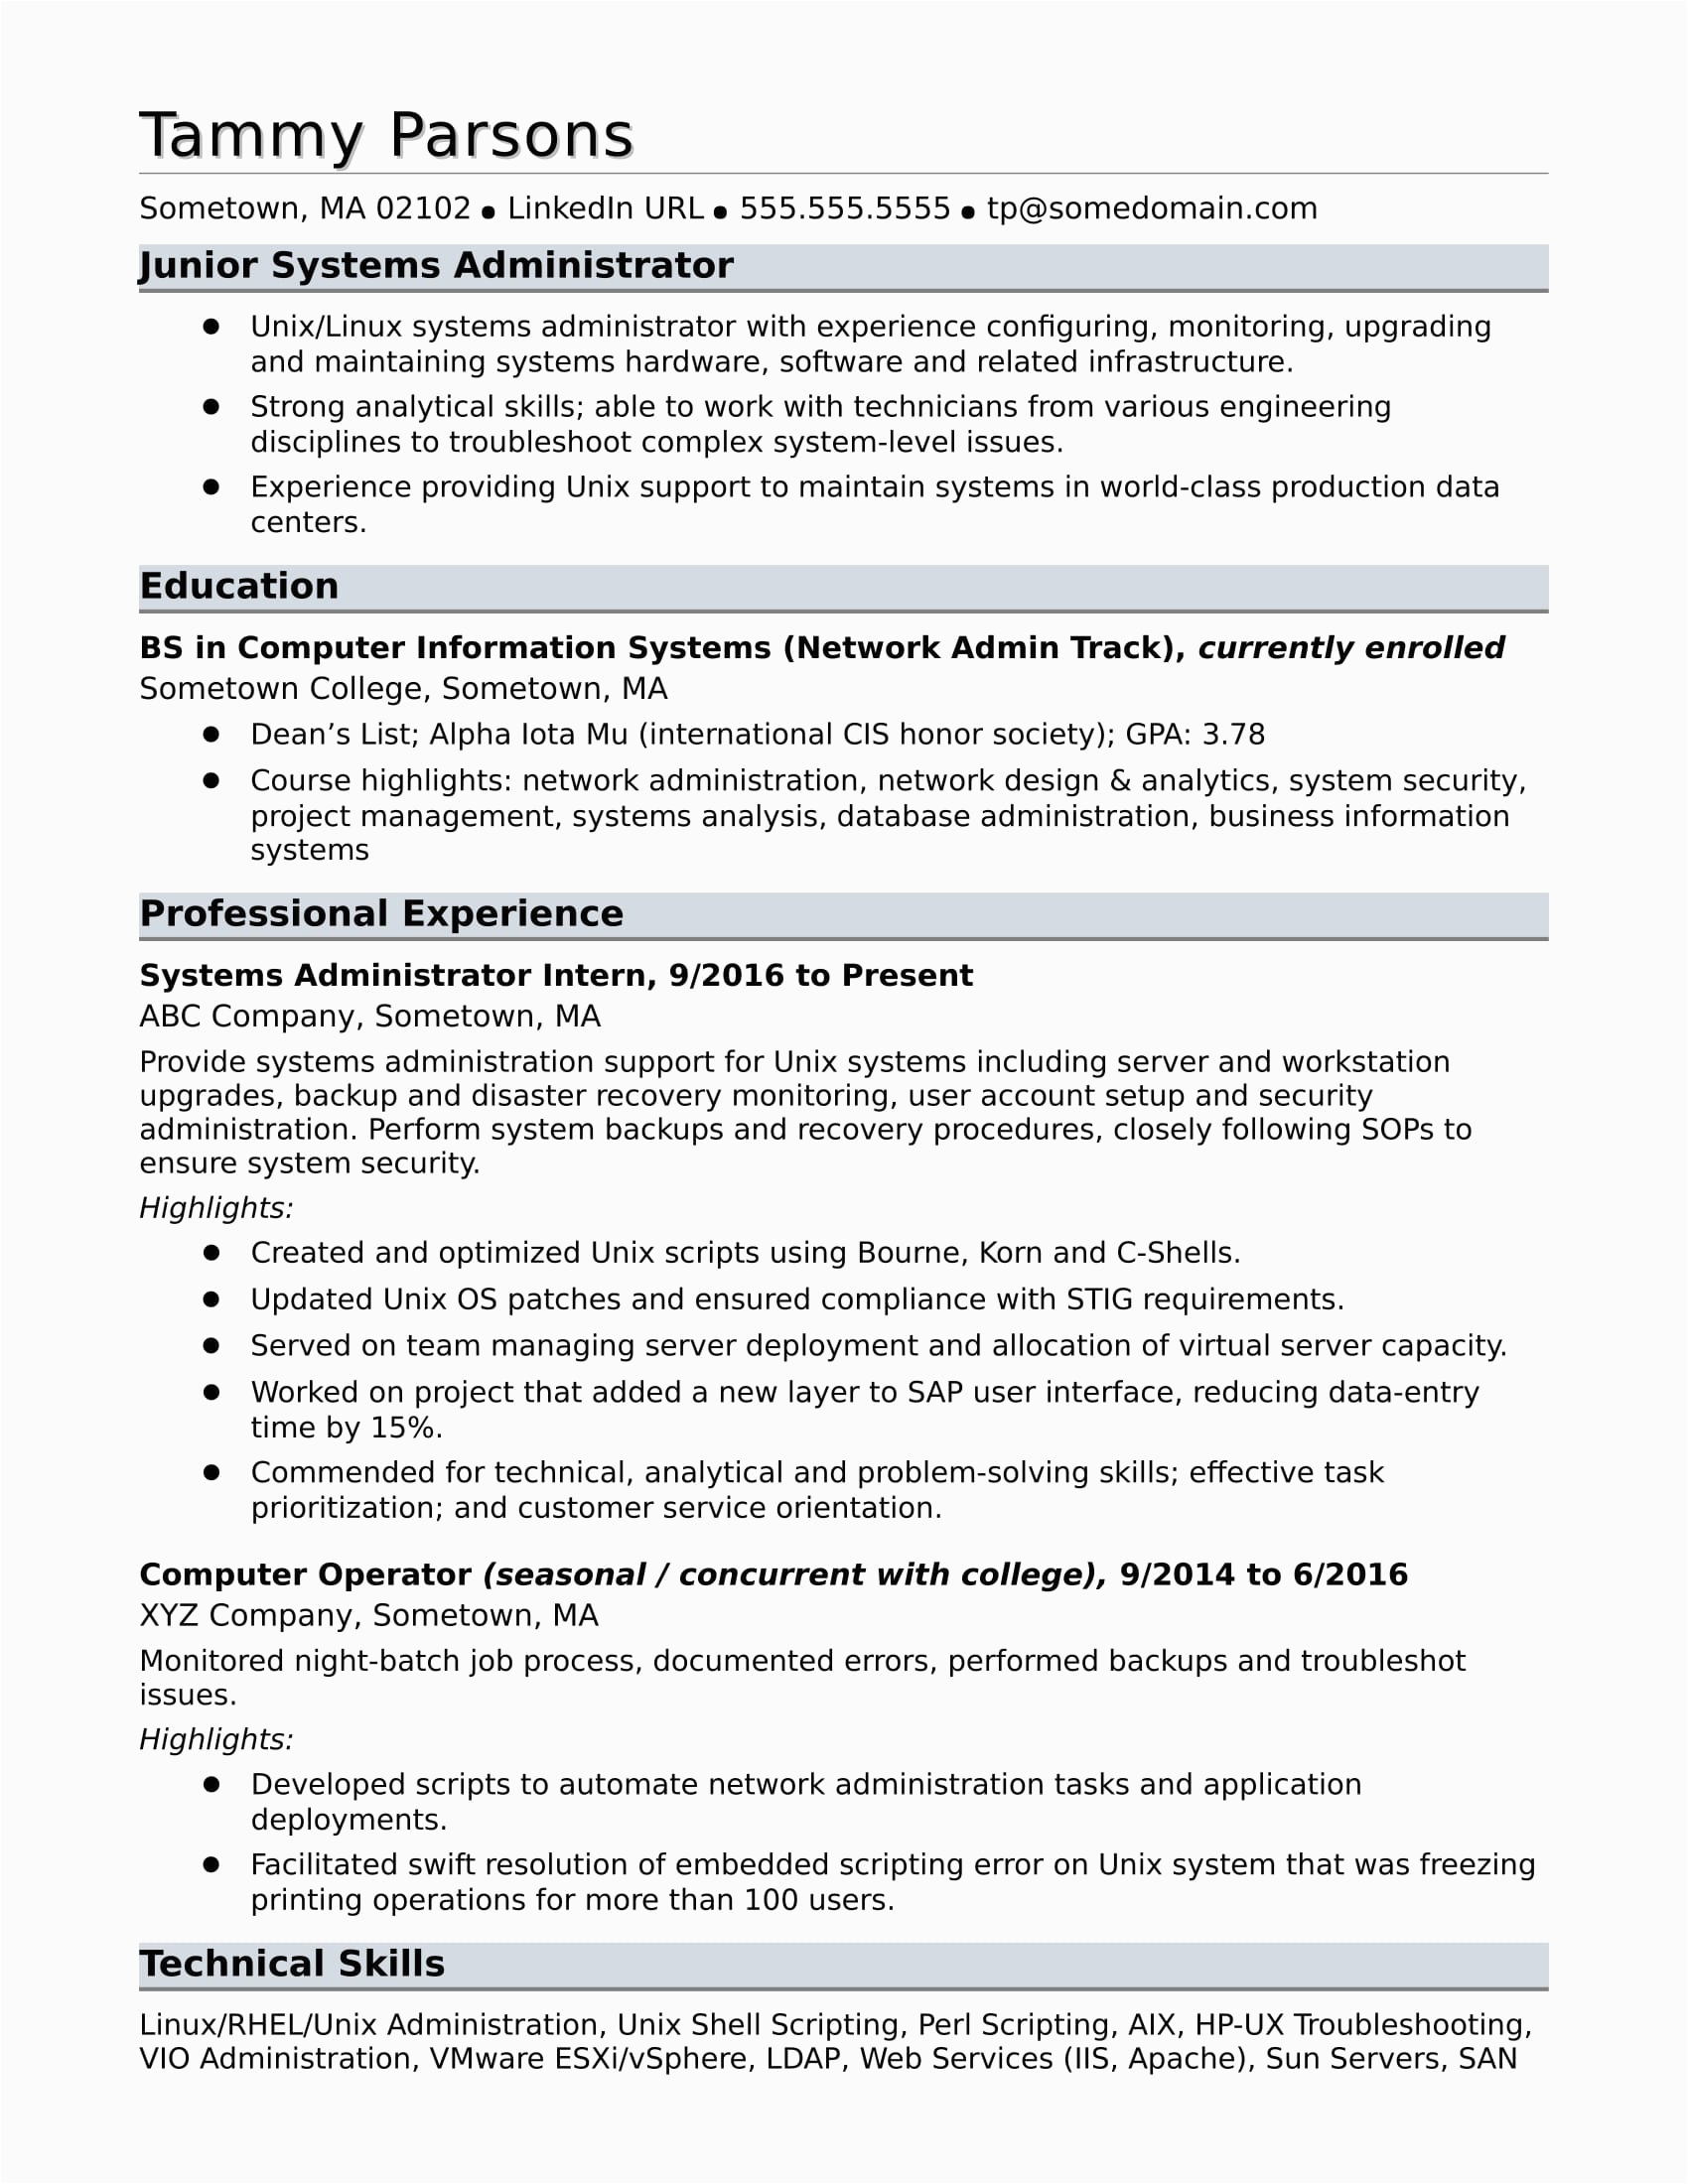 Sample Resume for Entry Level System Administrator Entry Level Systems Administrator Resume Sample